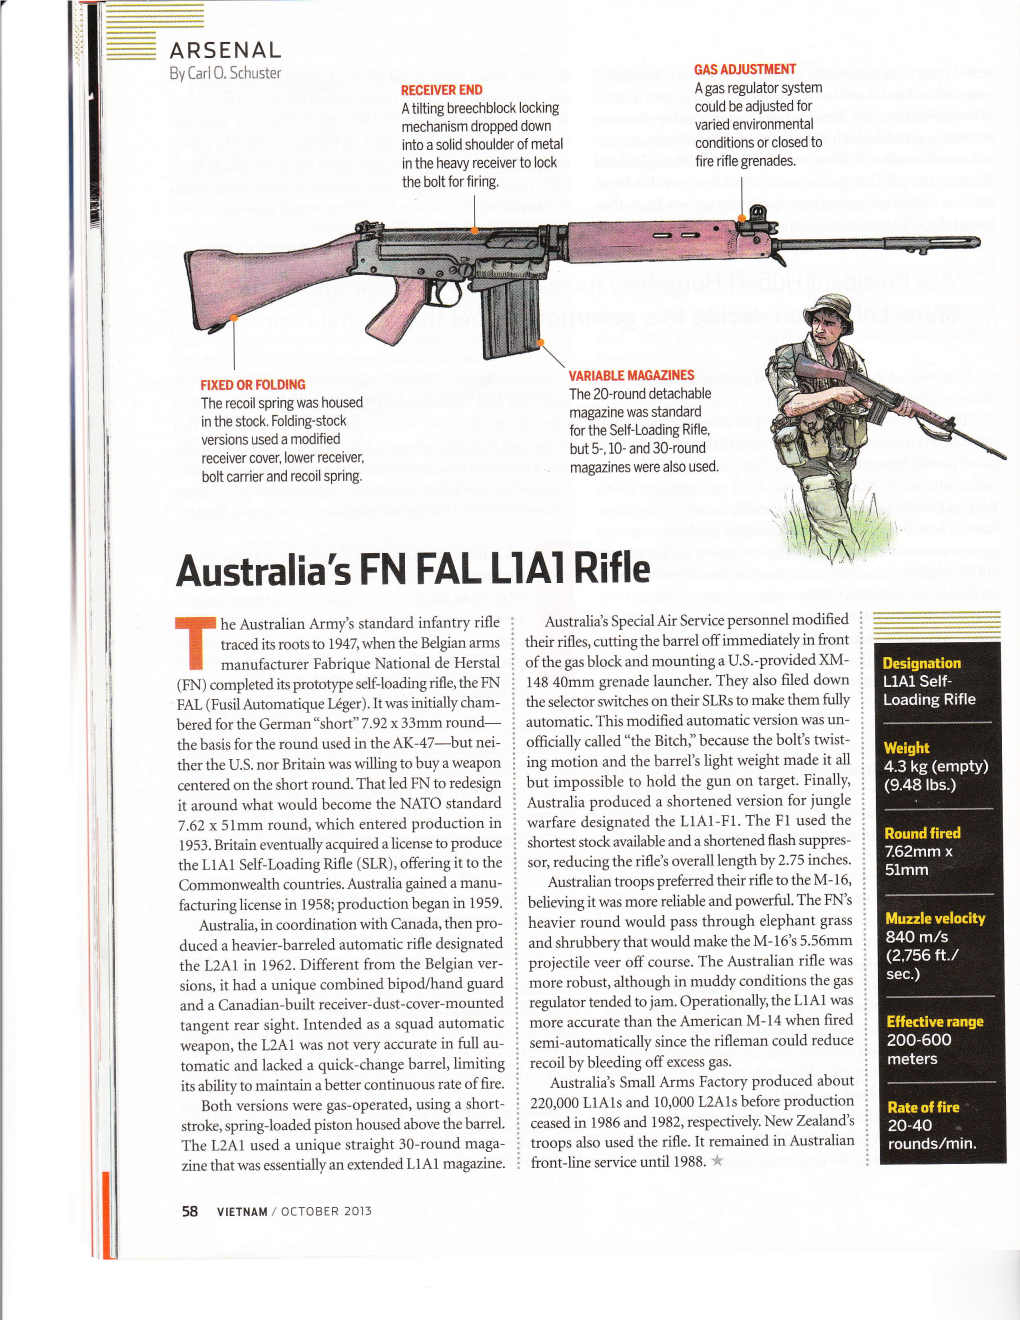 Australia's FN FAL Llal Rifle